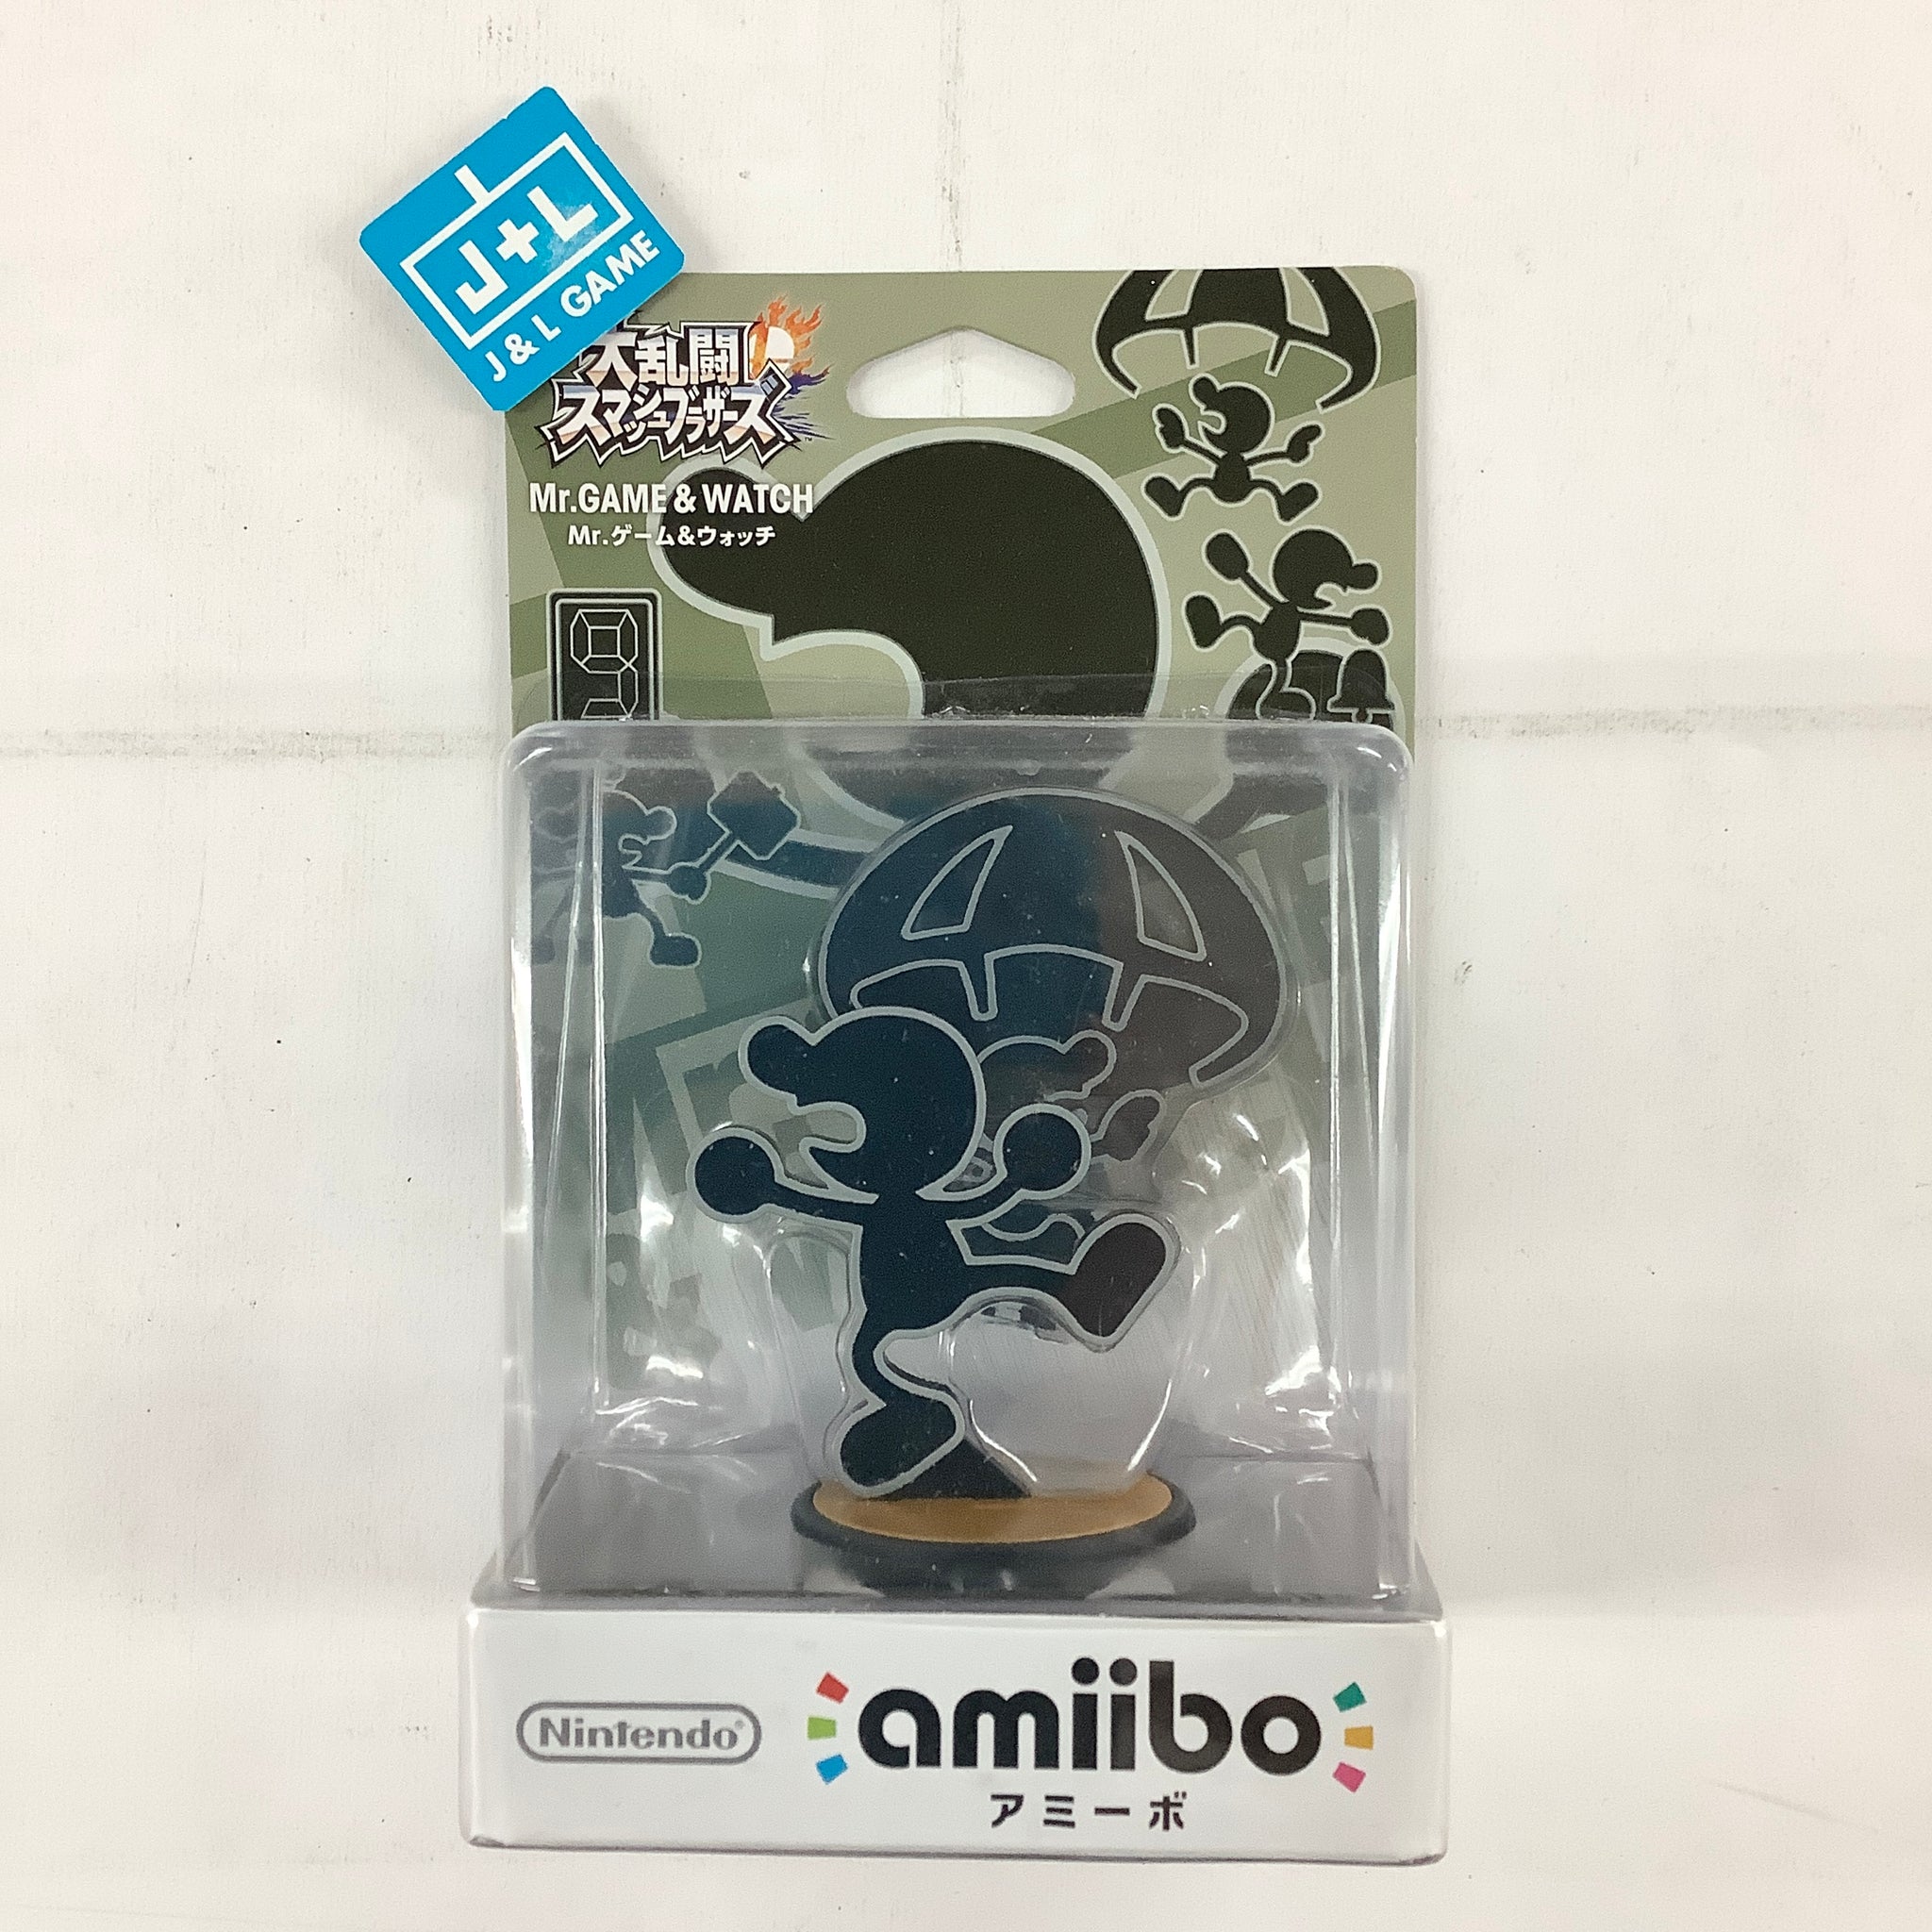 Mr. Game & Watch (Super Smash Bros. series) - Nintendo Amiibo (Japanese Import) Amiibo Nintendo   